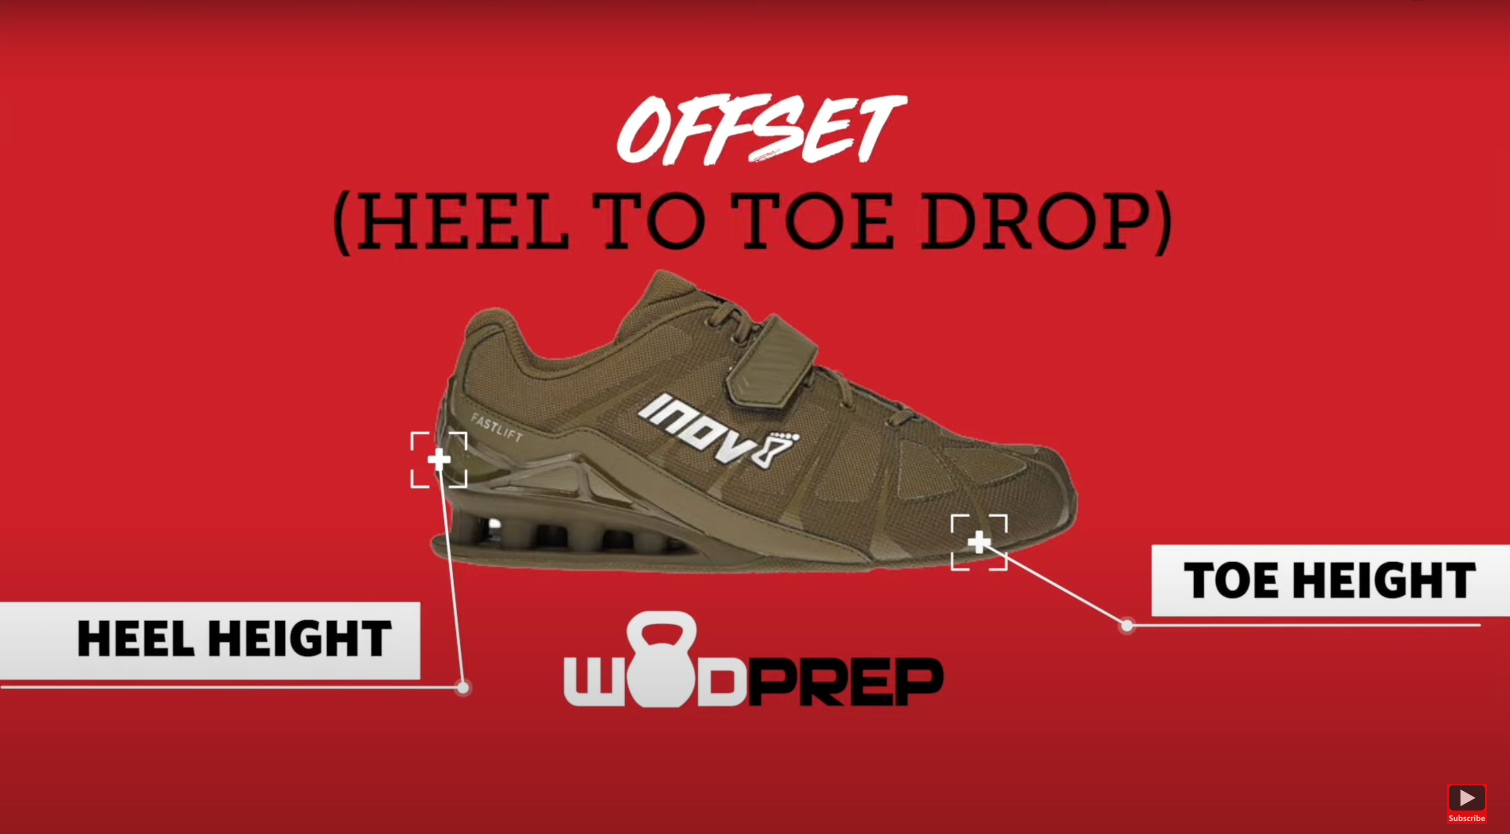 offset(heel to toe drop) crossfit training shoe